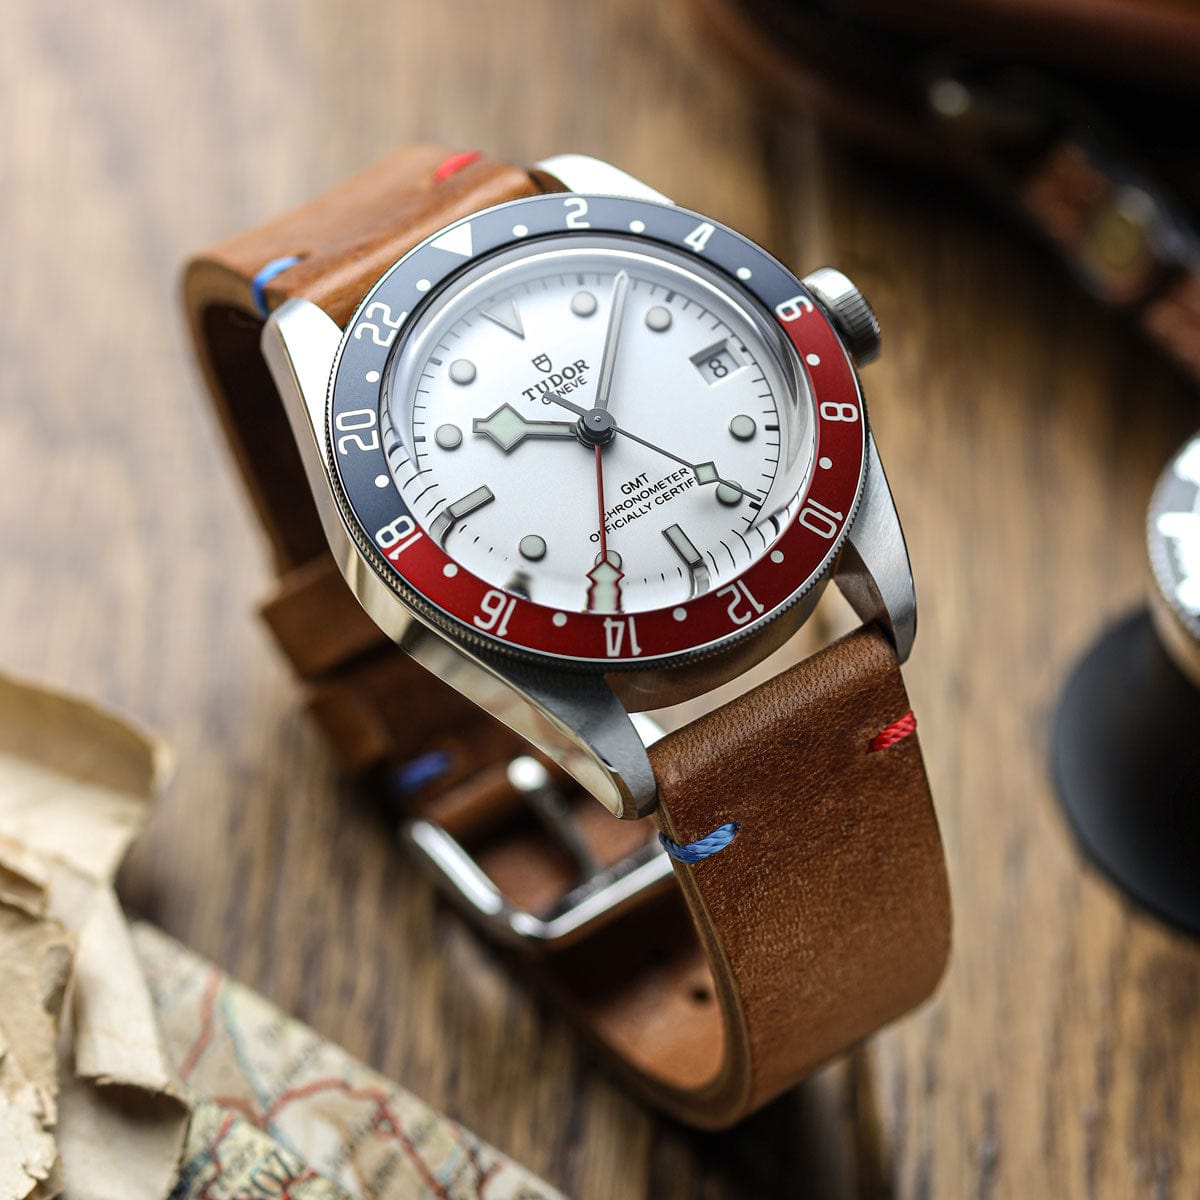 WatchGecko Simple Handmade Italian Leather Watch Strap - Reddish Brown, 18mm